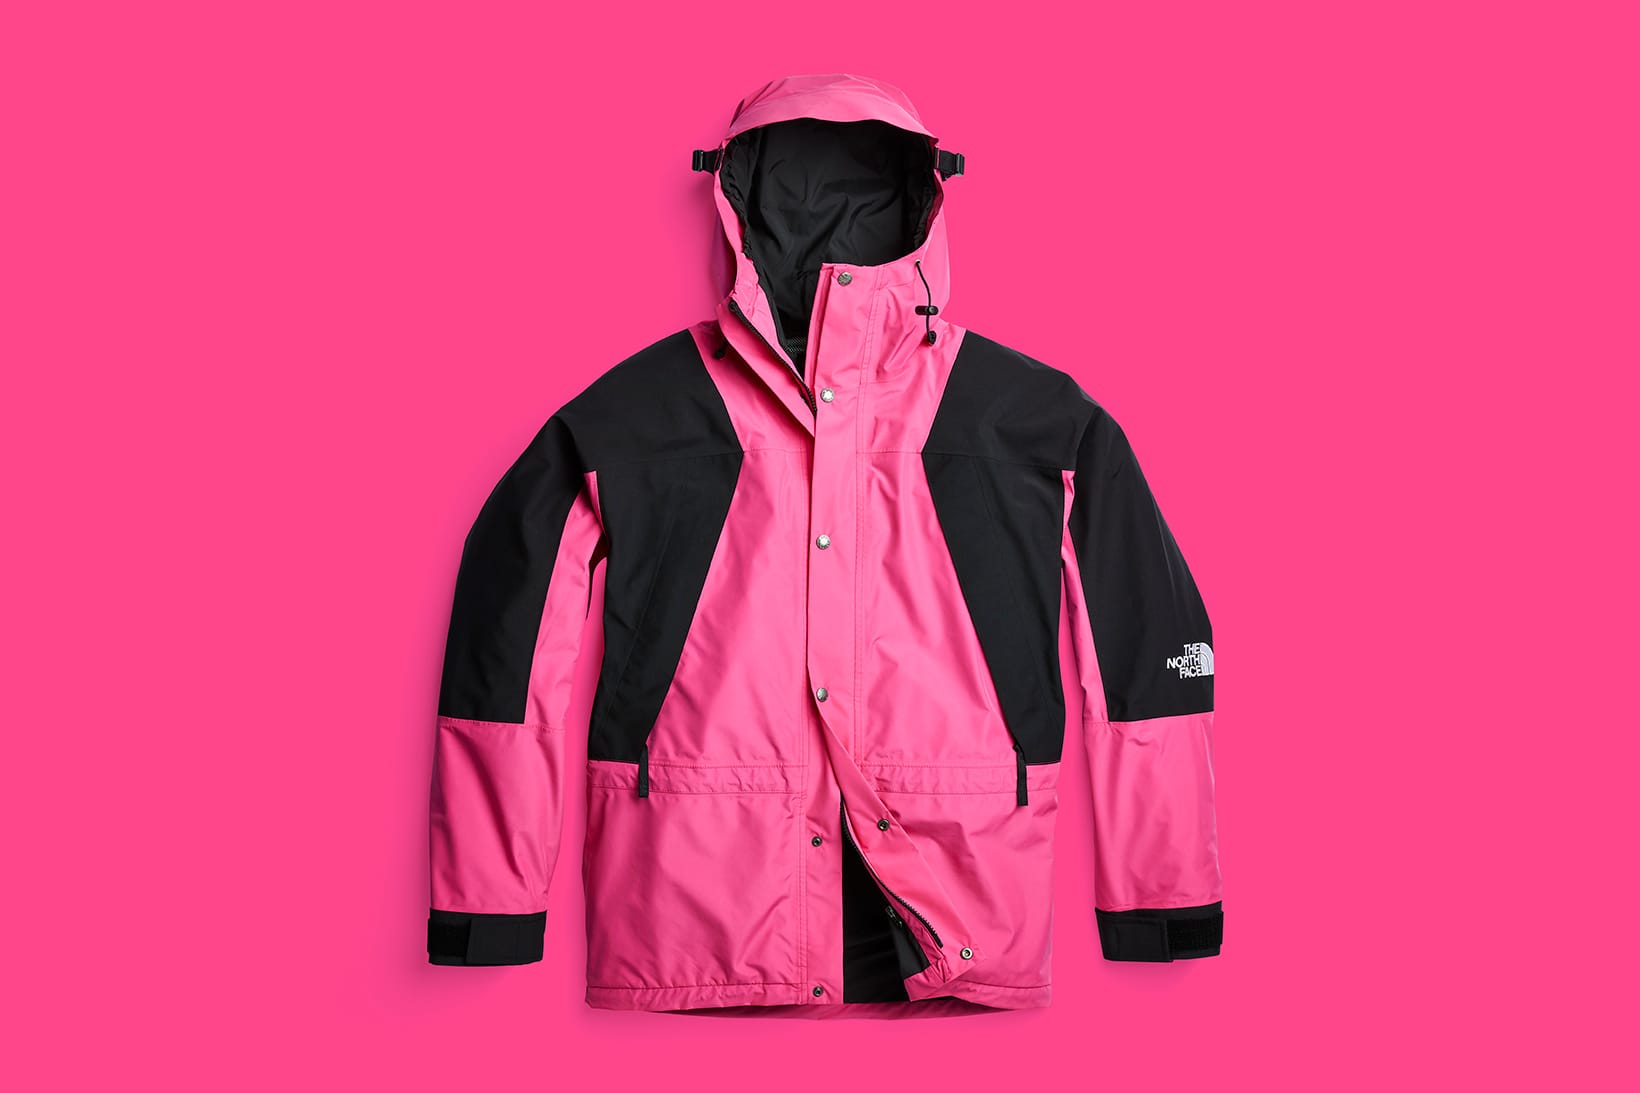 north face grey and pink jacket